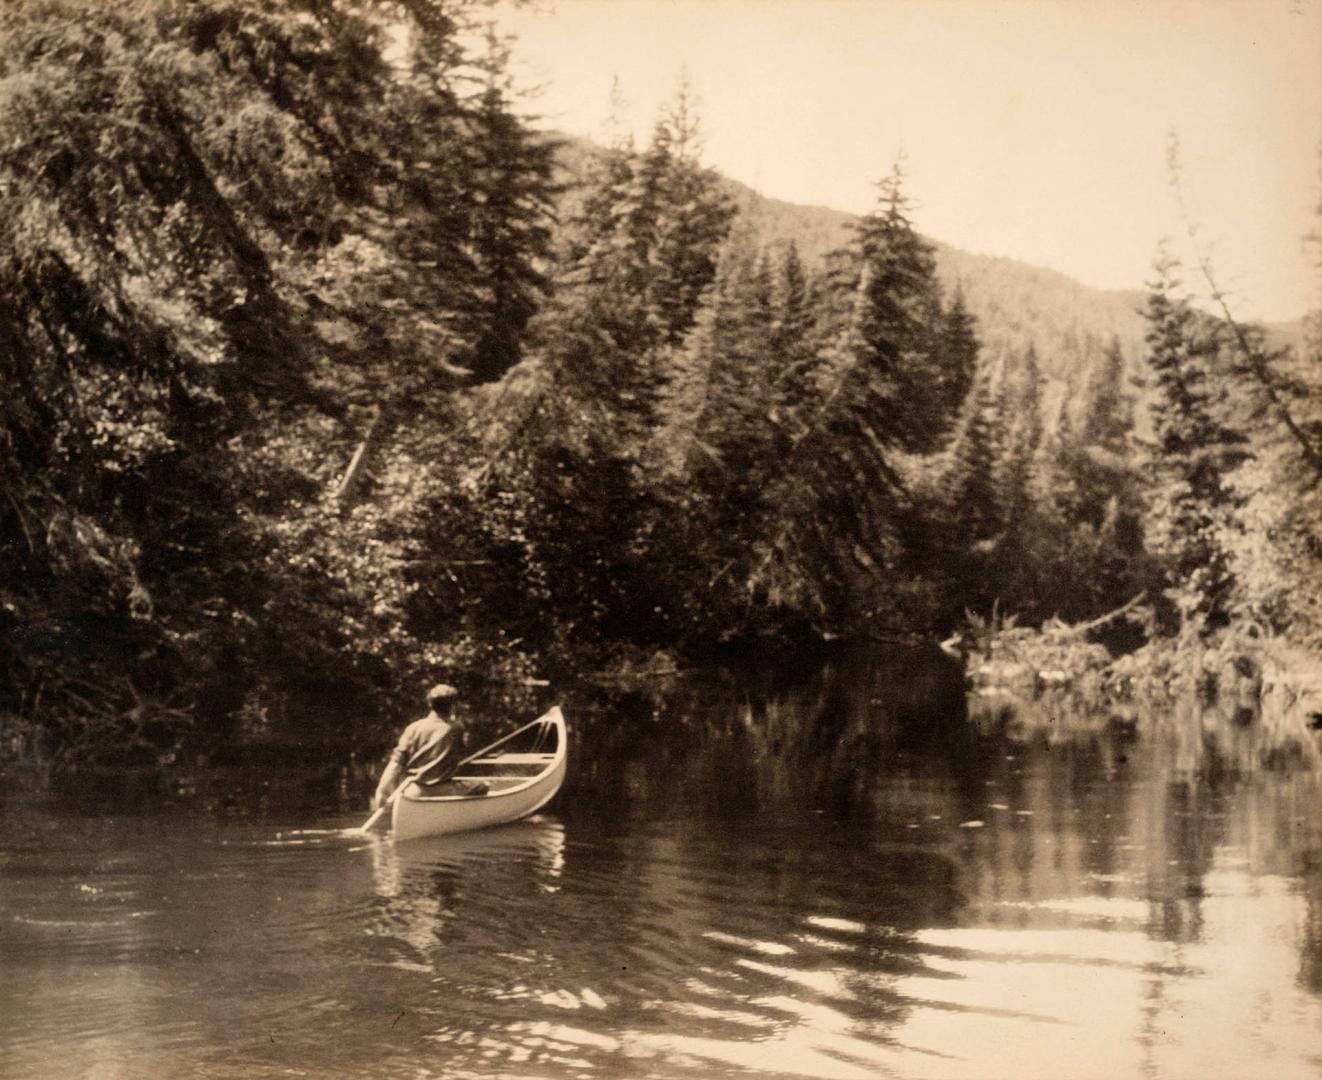 [Canoer on Forty Mile Creek, Banff 11002]